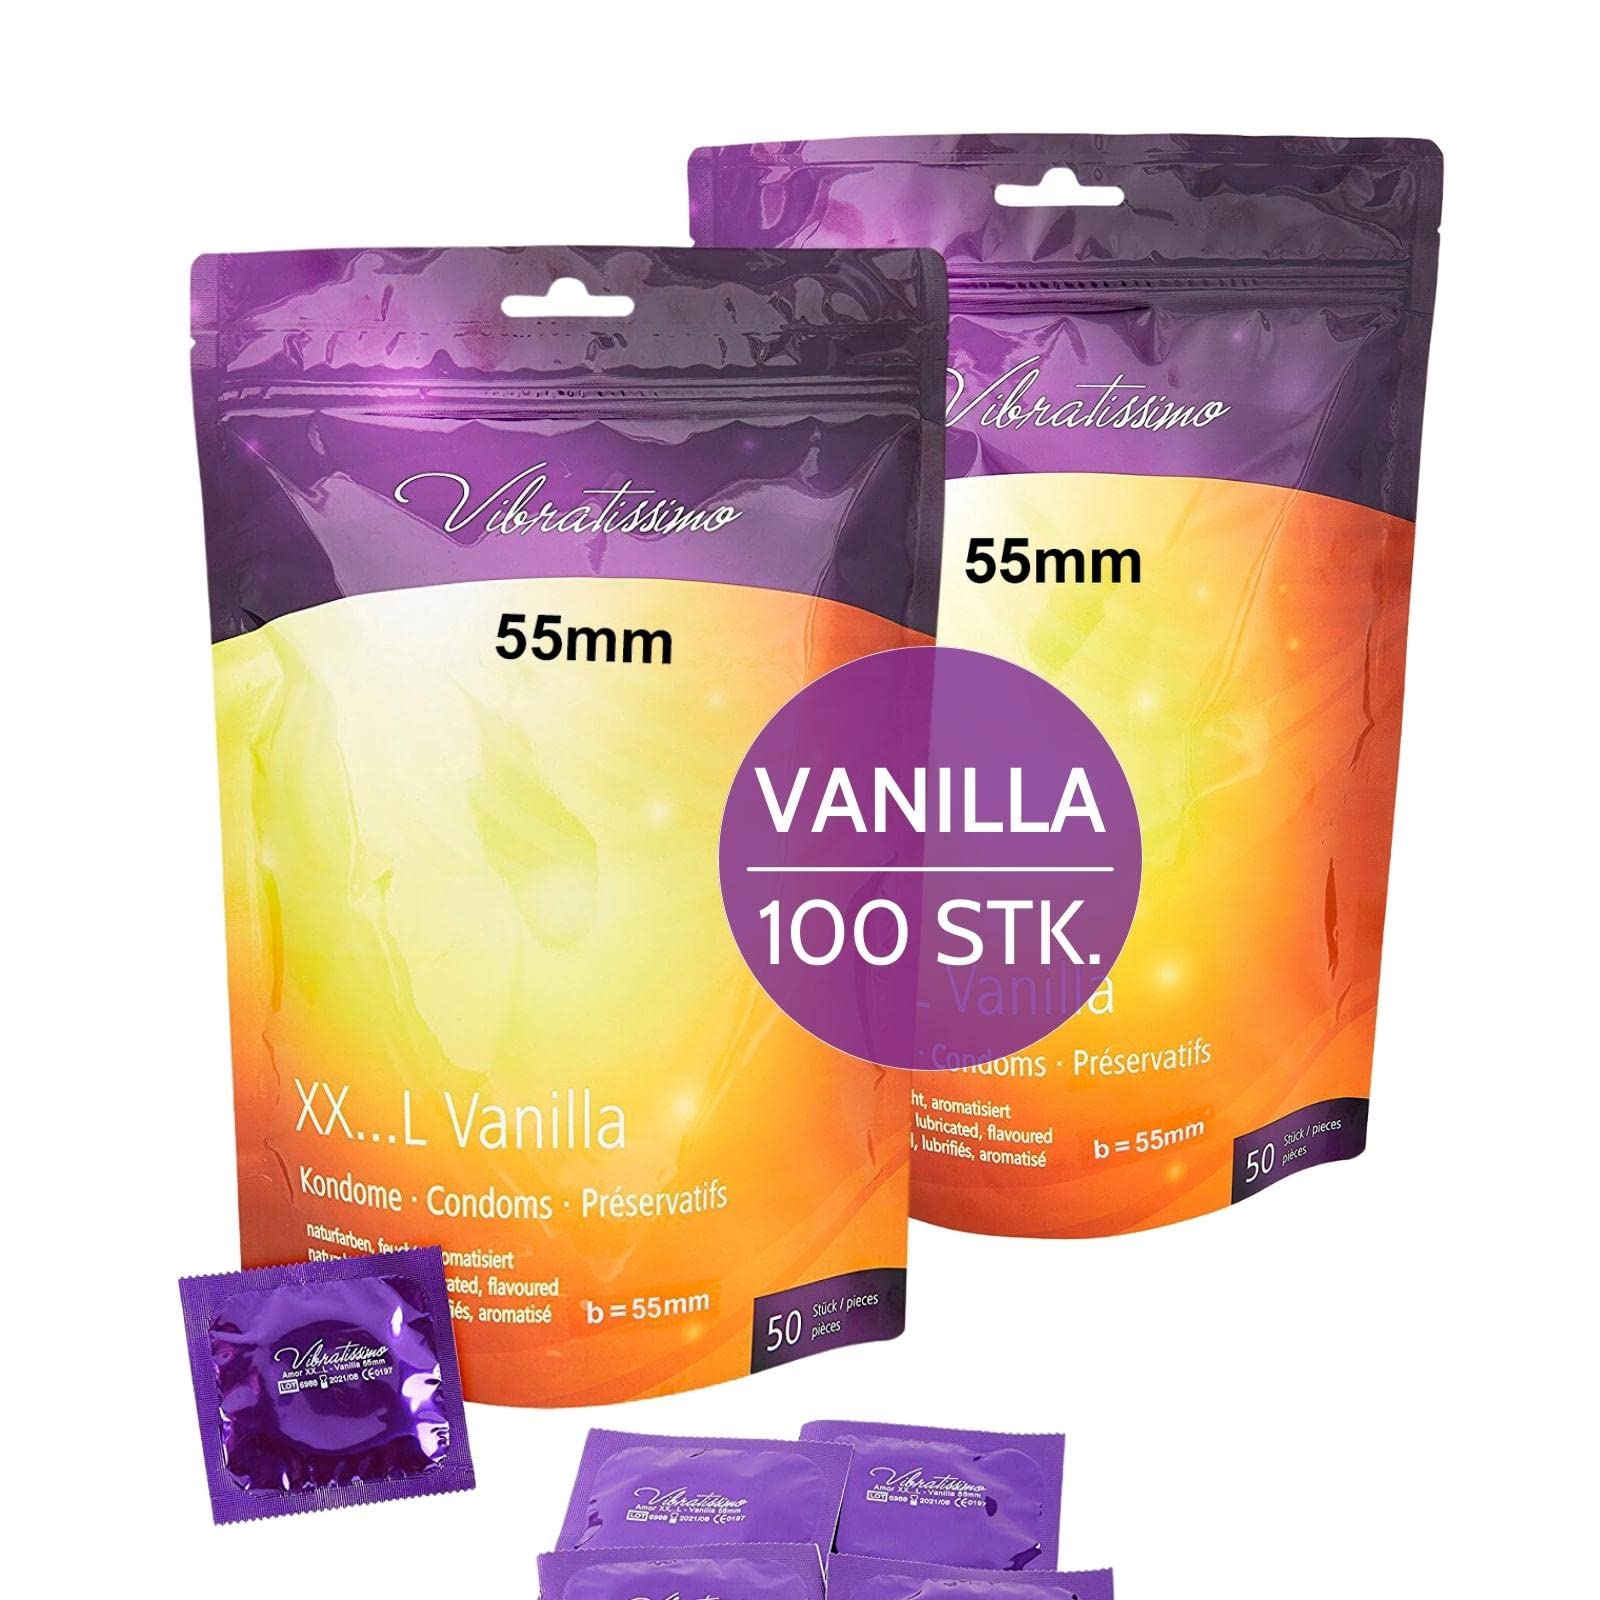 VIBRATISSIMO Kondome XXL Vanilla 100er Pack I Premium Kondome mit Aroma I Condoms for Men I Vanille-Kondome mit dünner Wandstärke & aromatisiert I Kondome gefühlsecht hauchzart I b=55mm